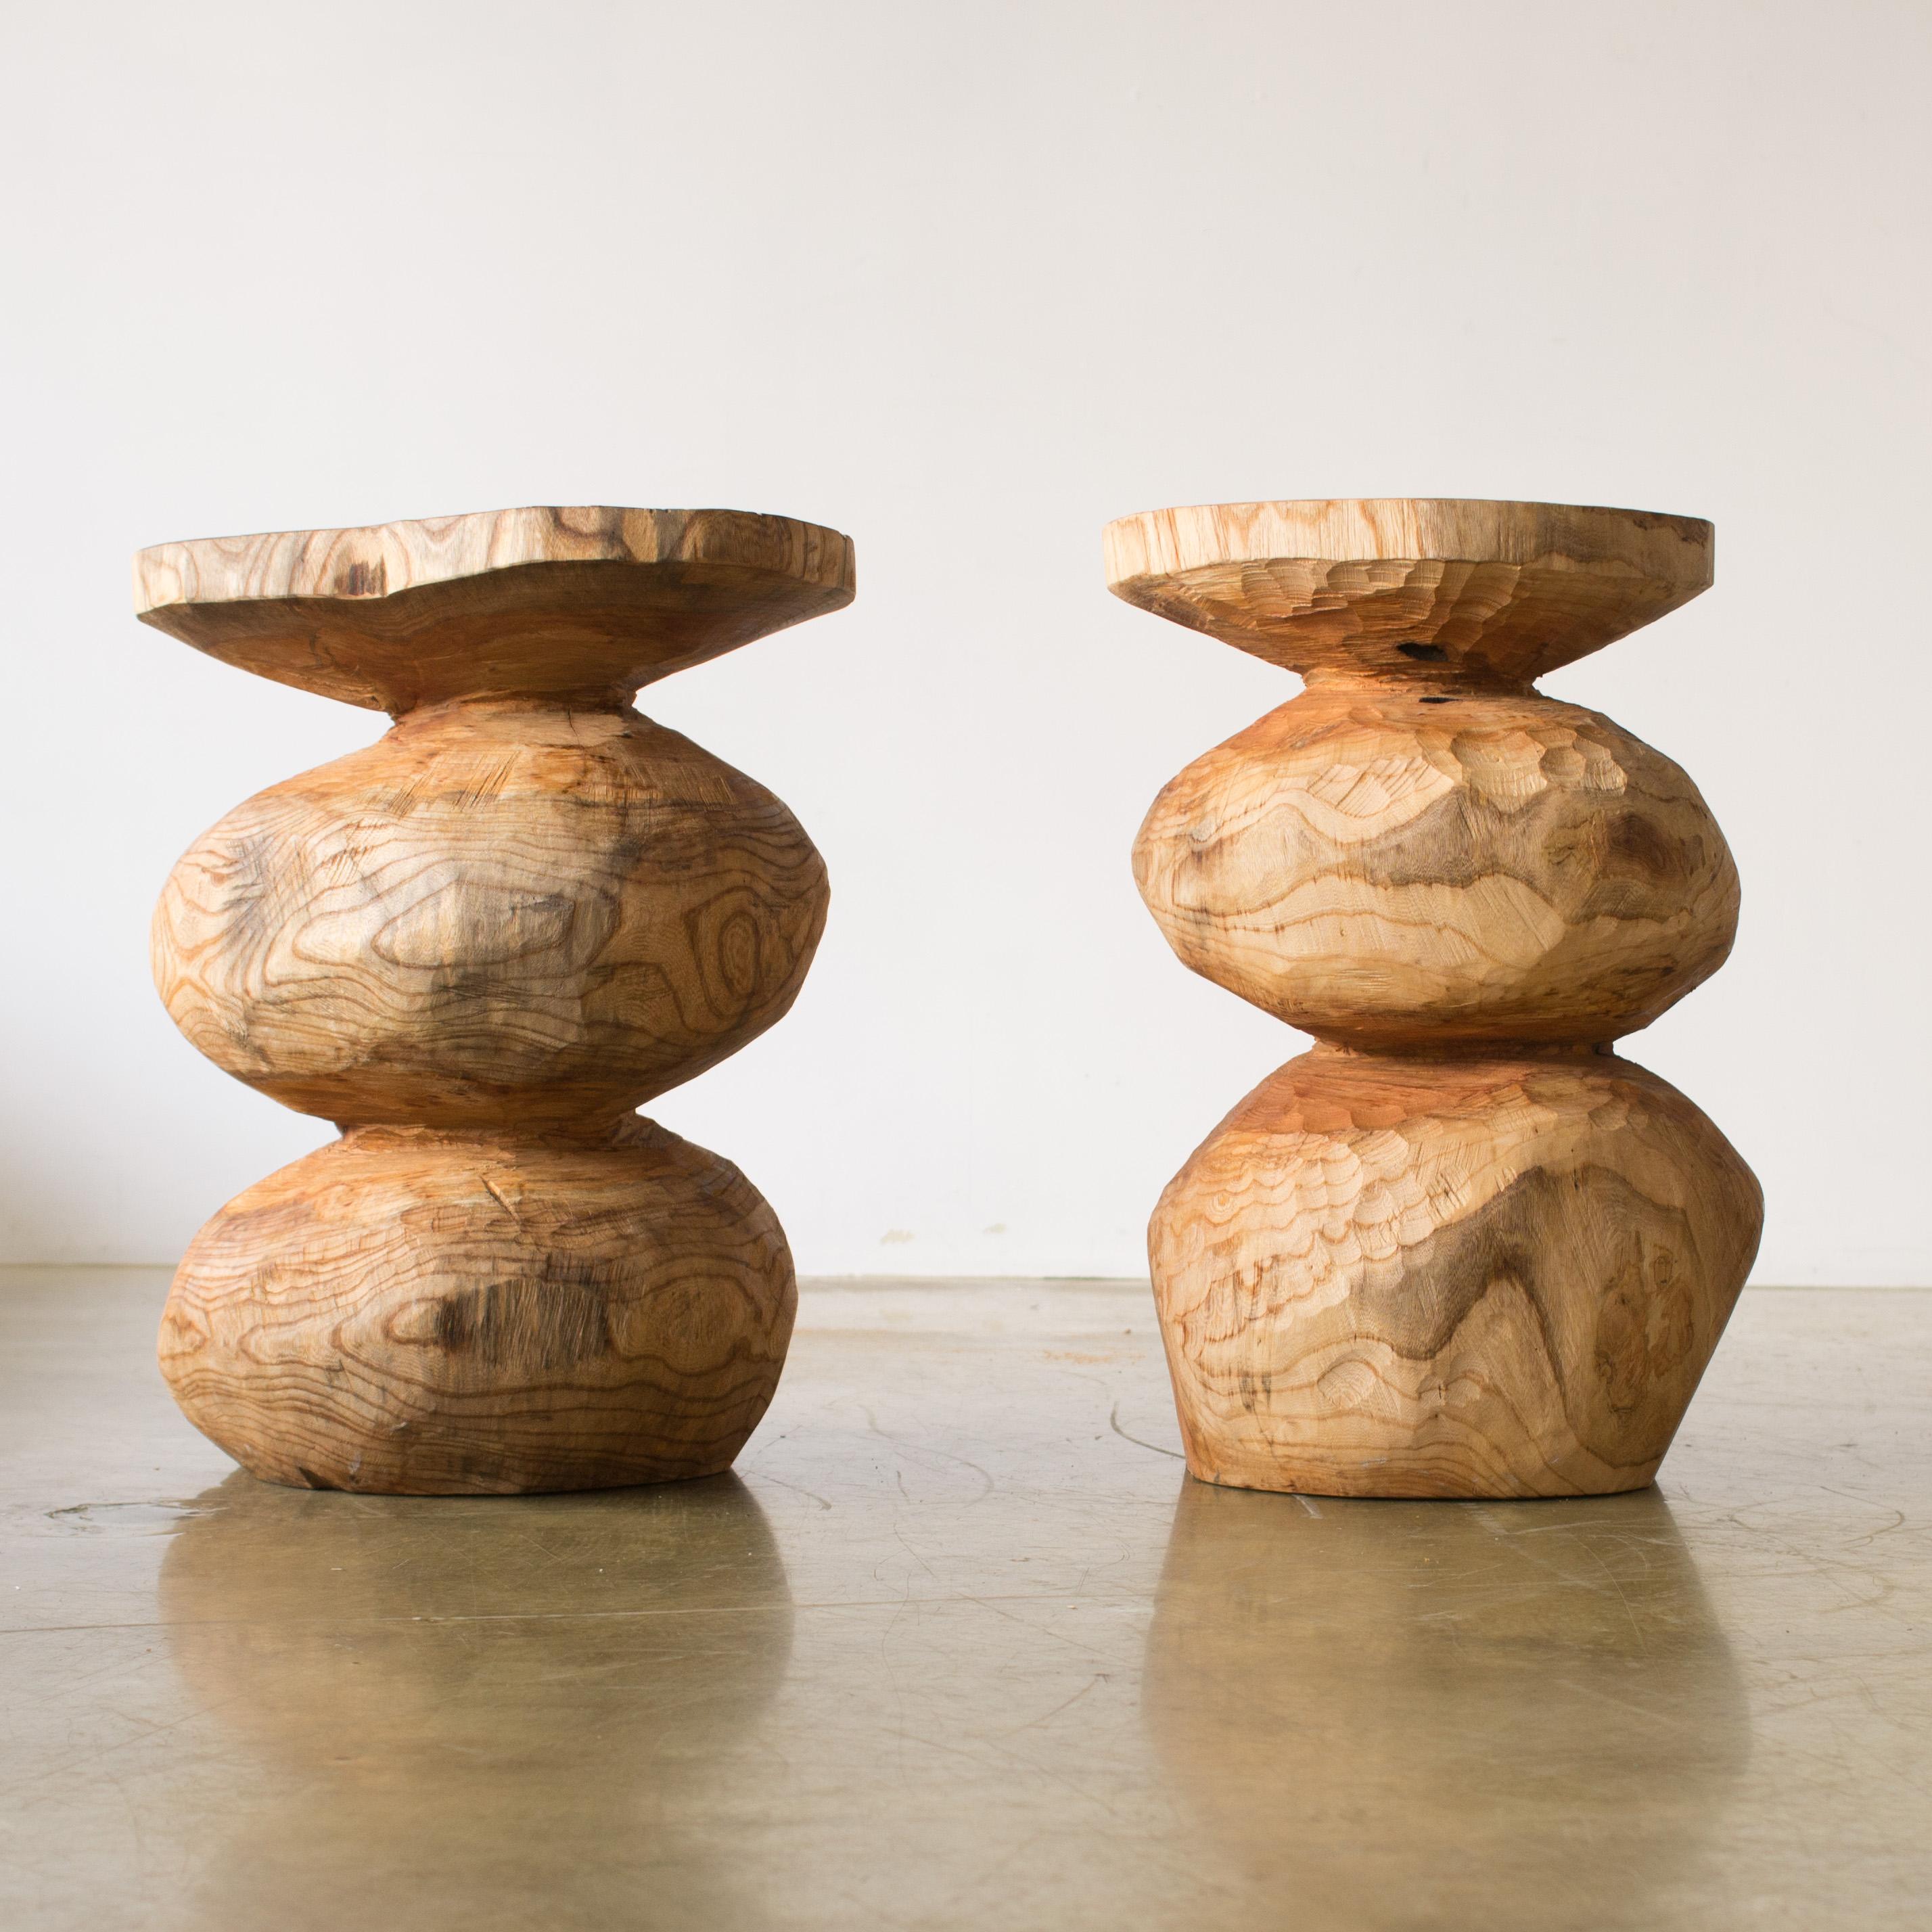 Contemporary Hiroyuki Nishimura Furniture Sculptural Wood Stool10-06 Tribal Glamping